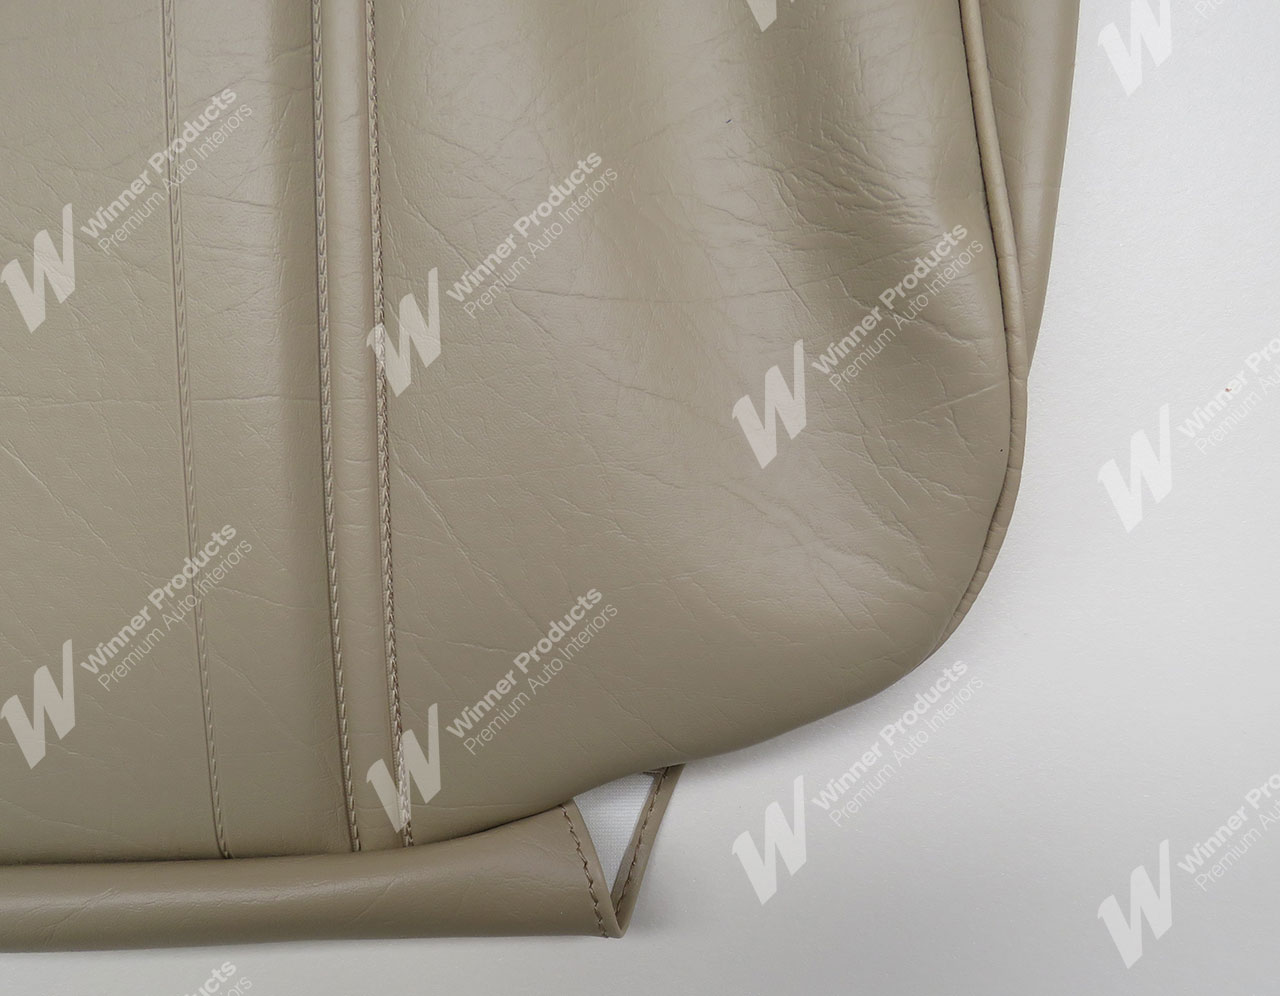 Holden Sandman HQ Sandman Panel Van 38E Doeskin Seat Covers (Image 5 of 5)